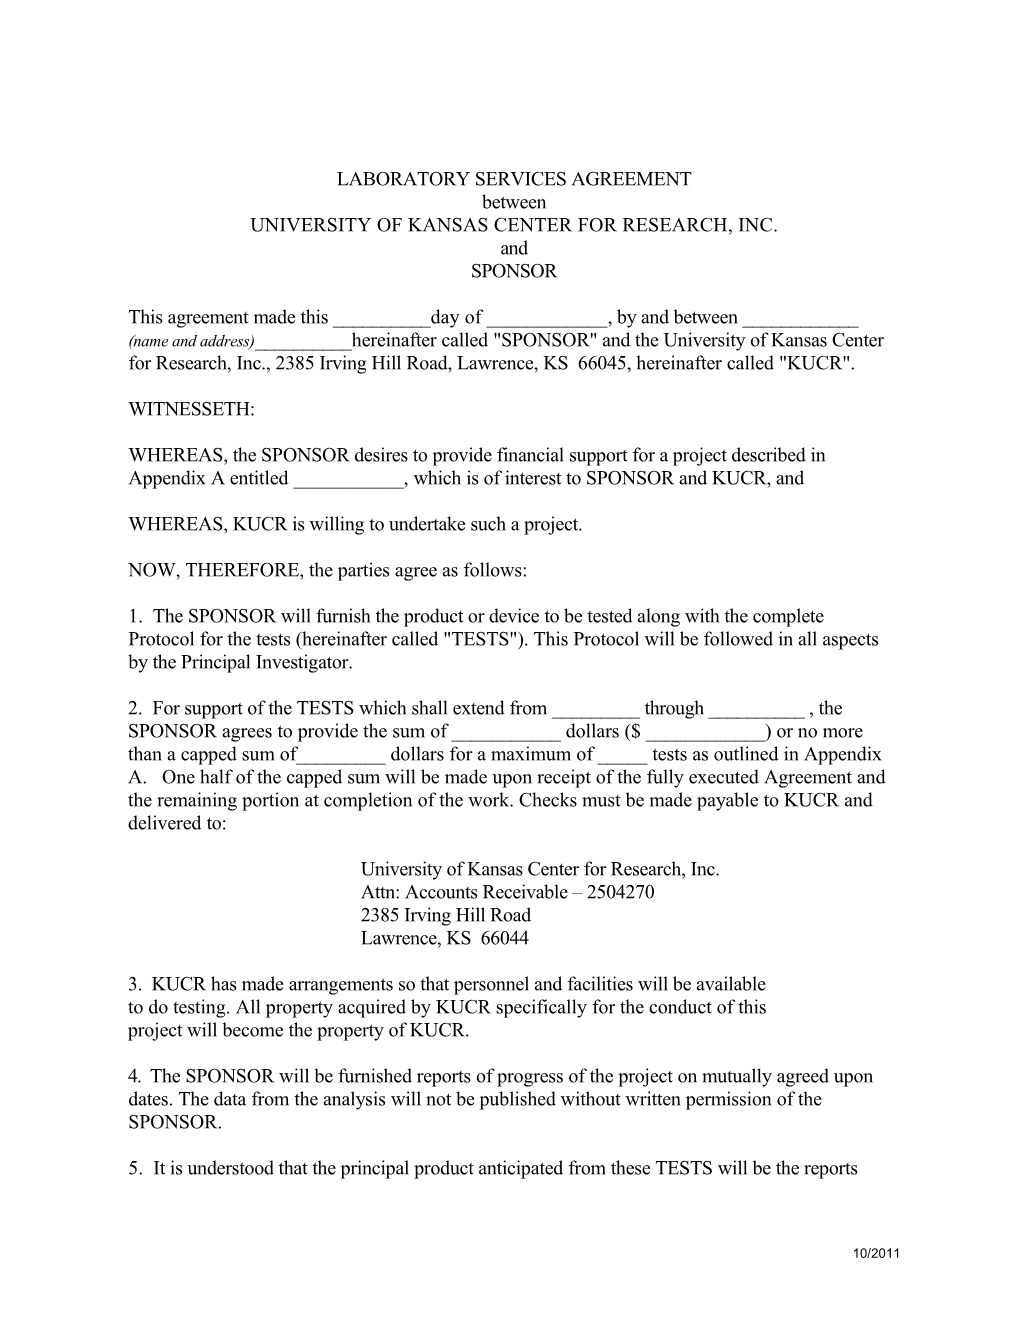 Laboratory Services Agreement